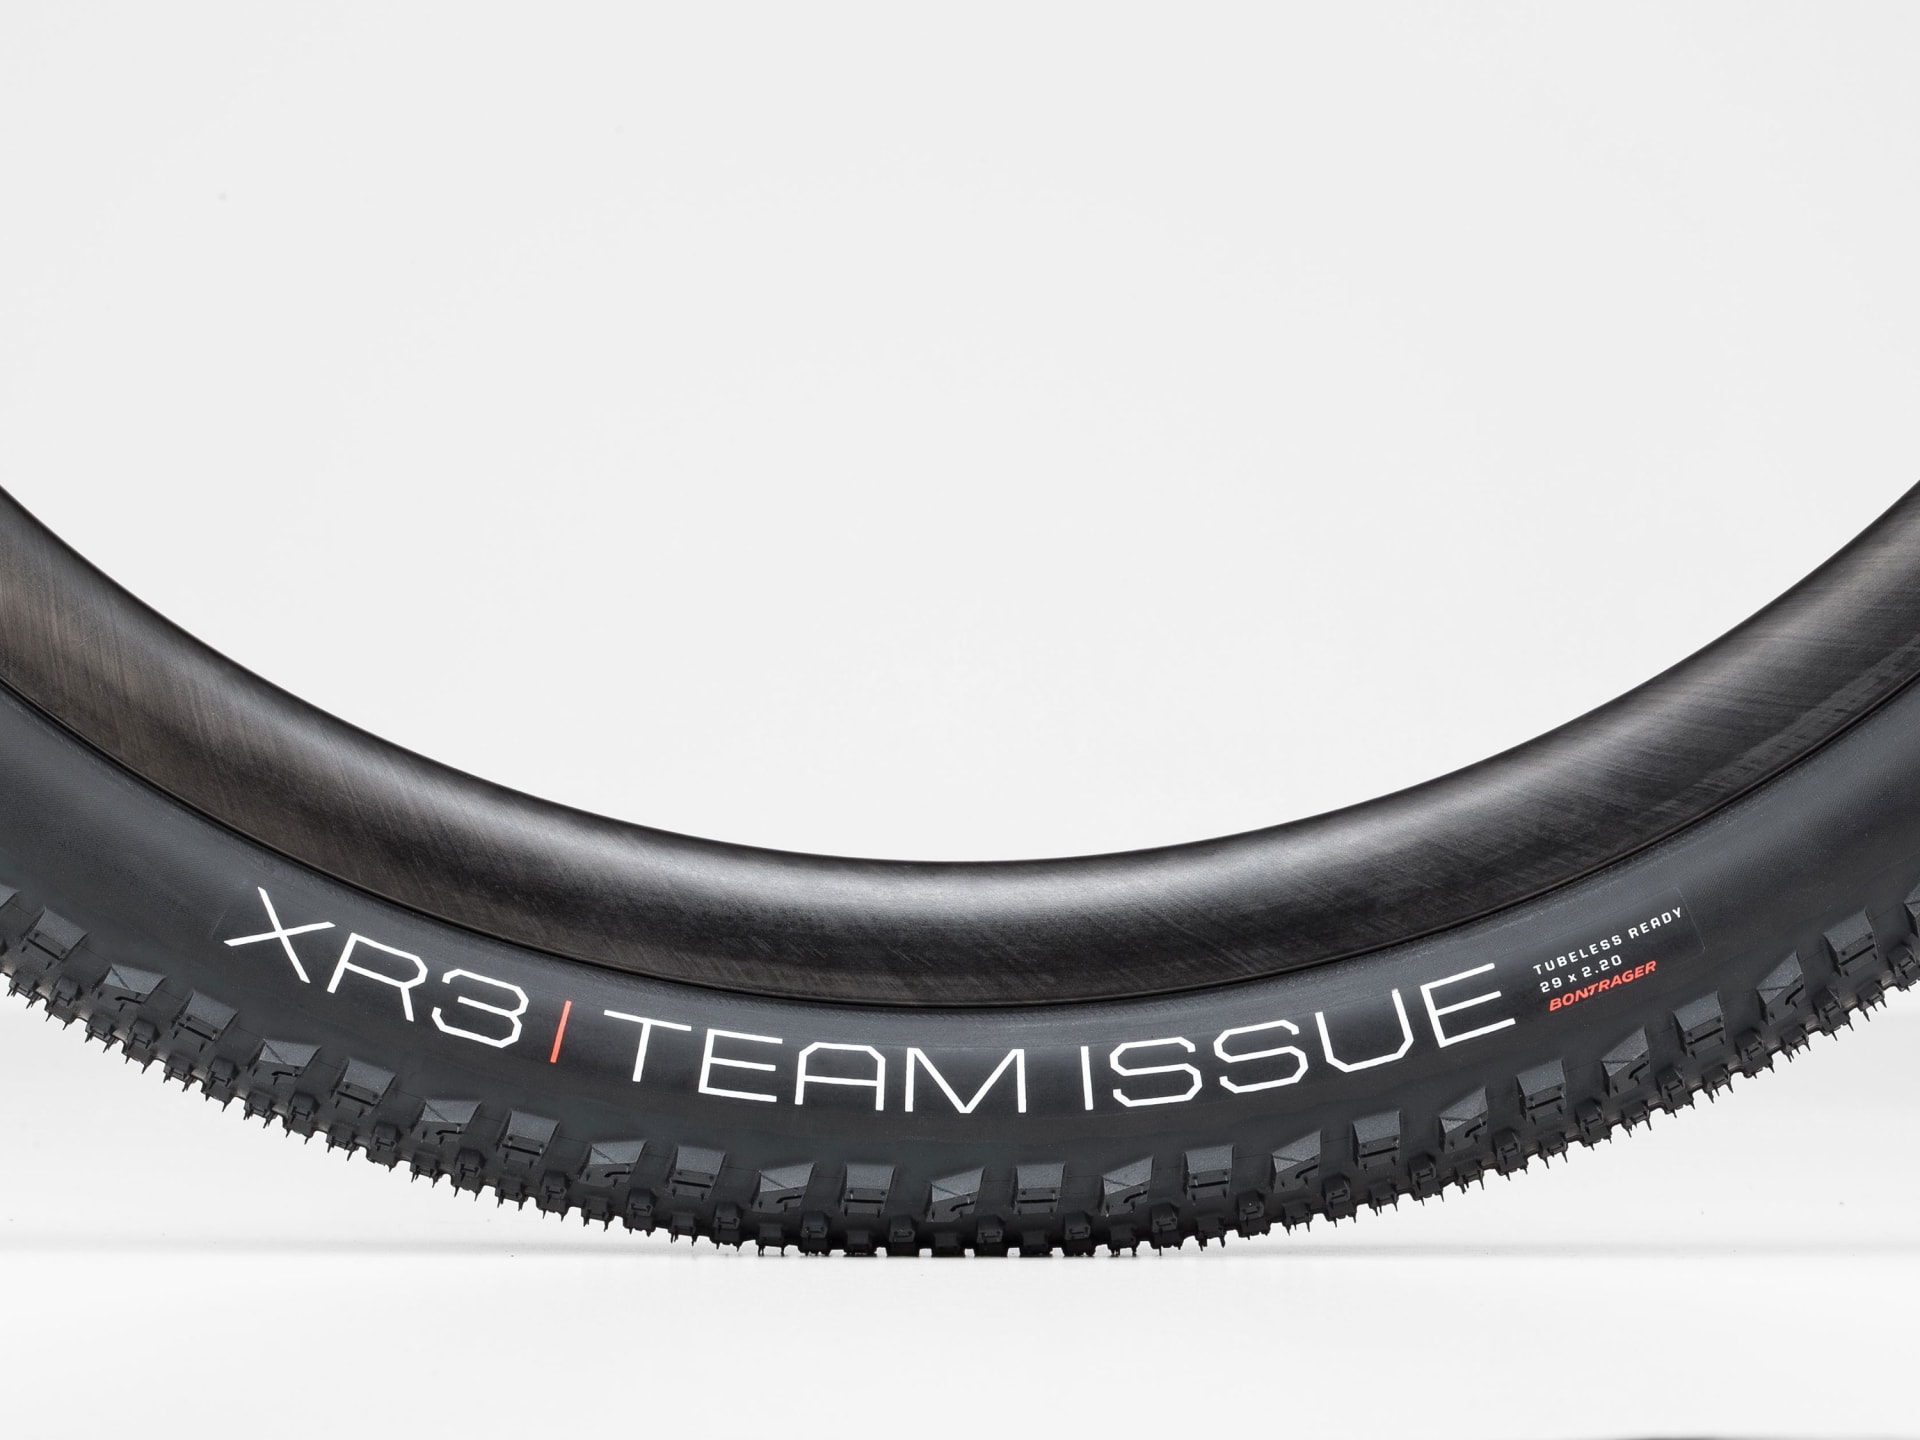 Bontrager XR3 Team Issue TLR MTB Tire